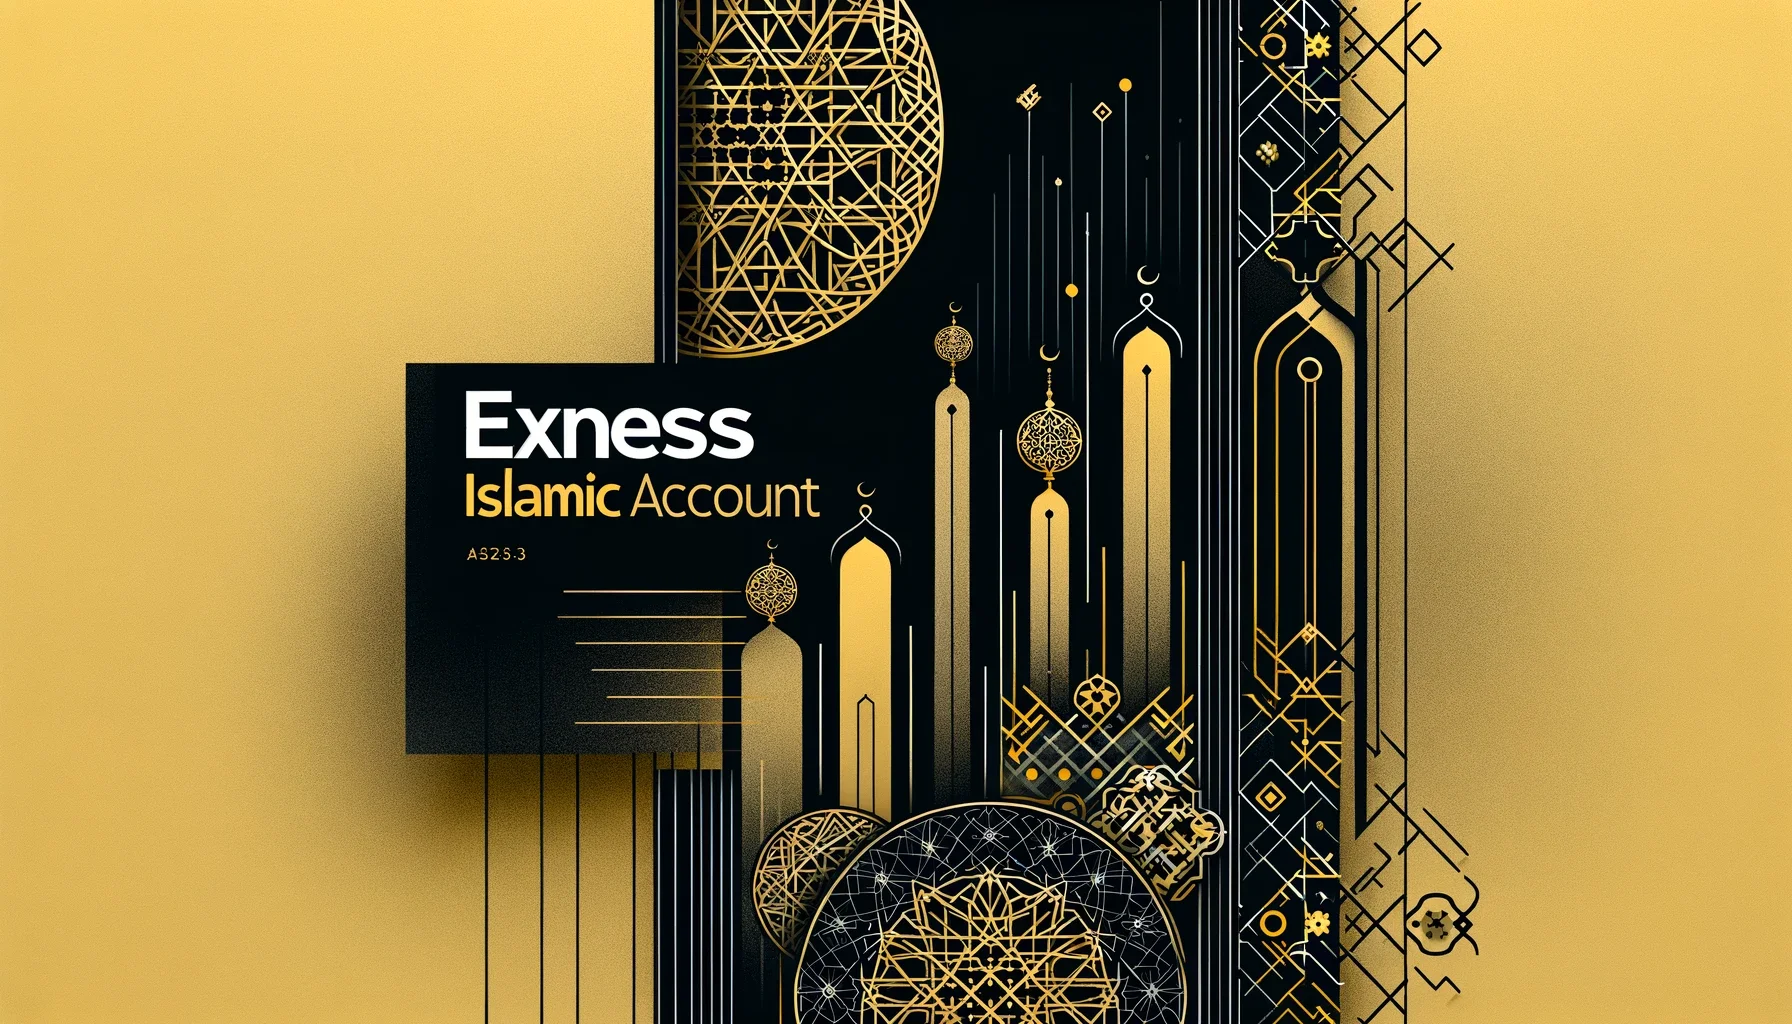 Exness Islamic Account